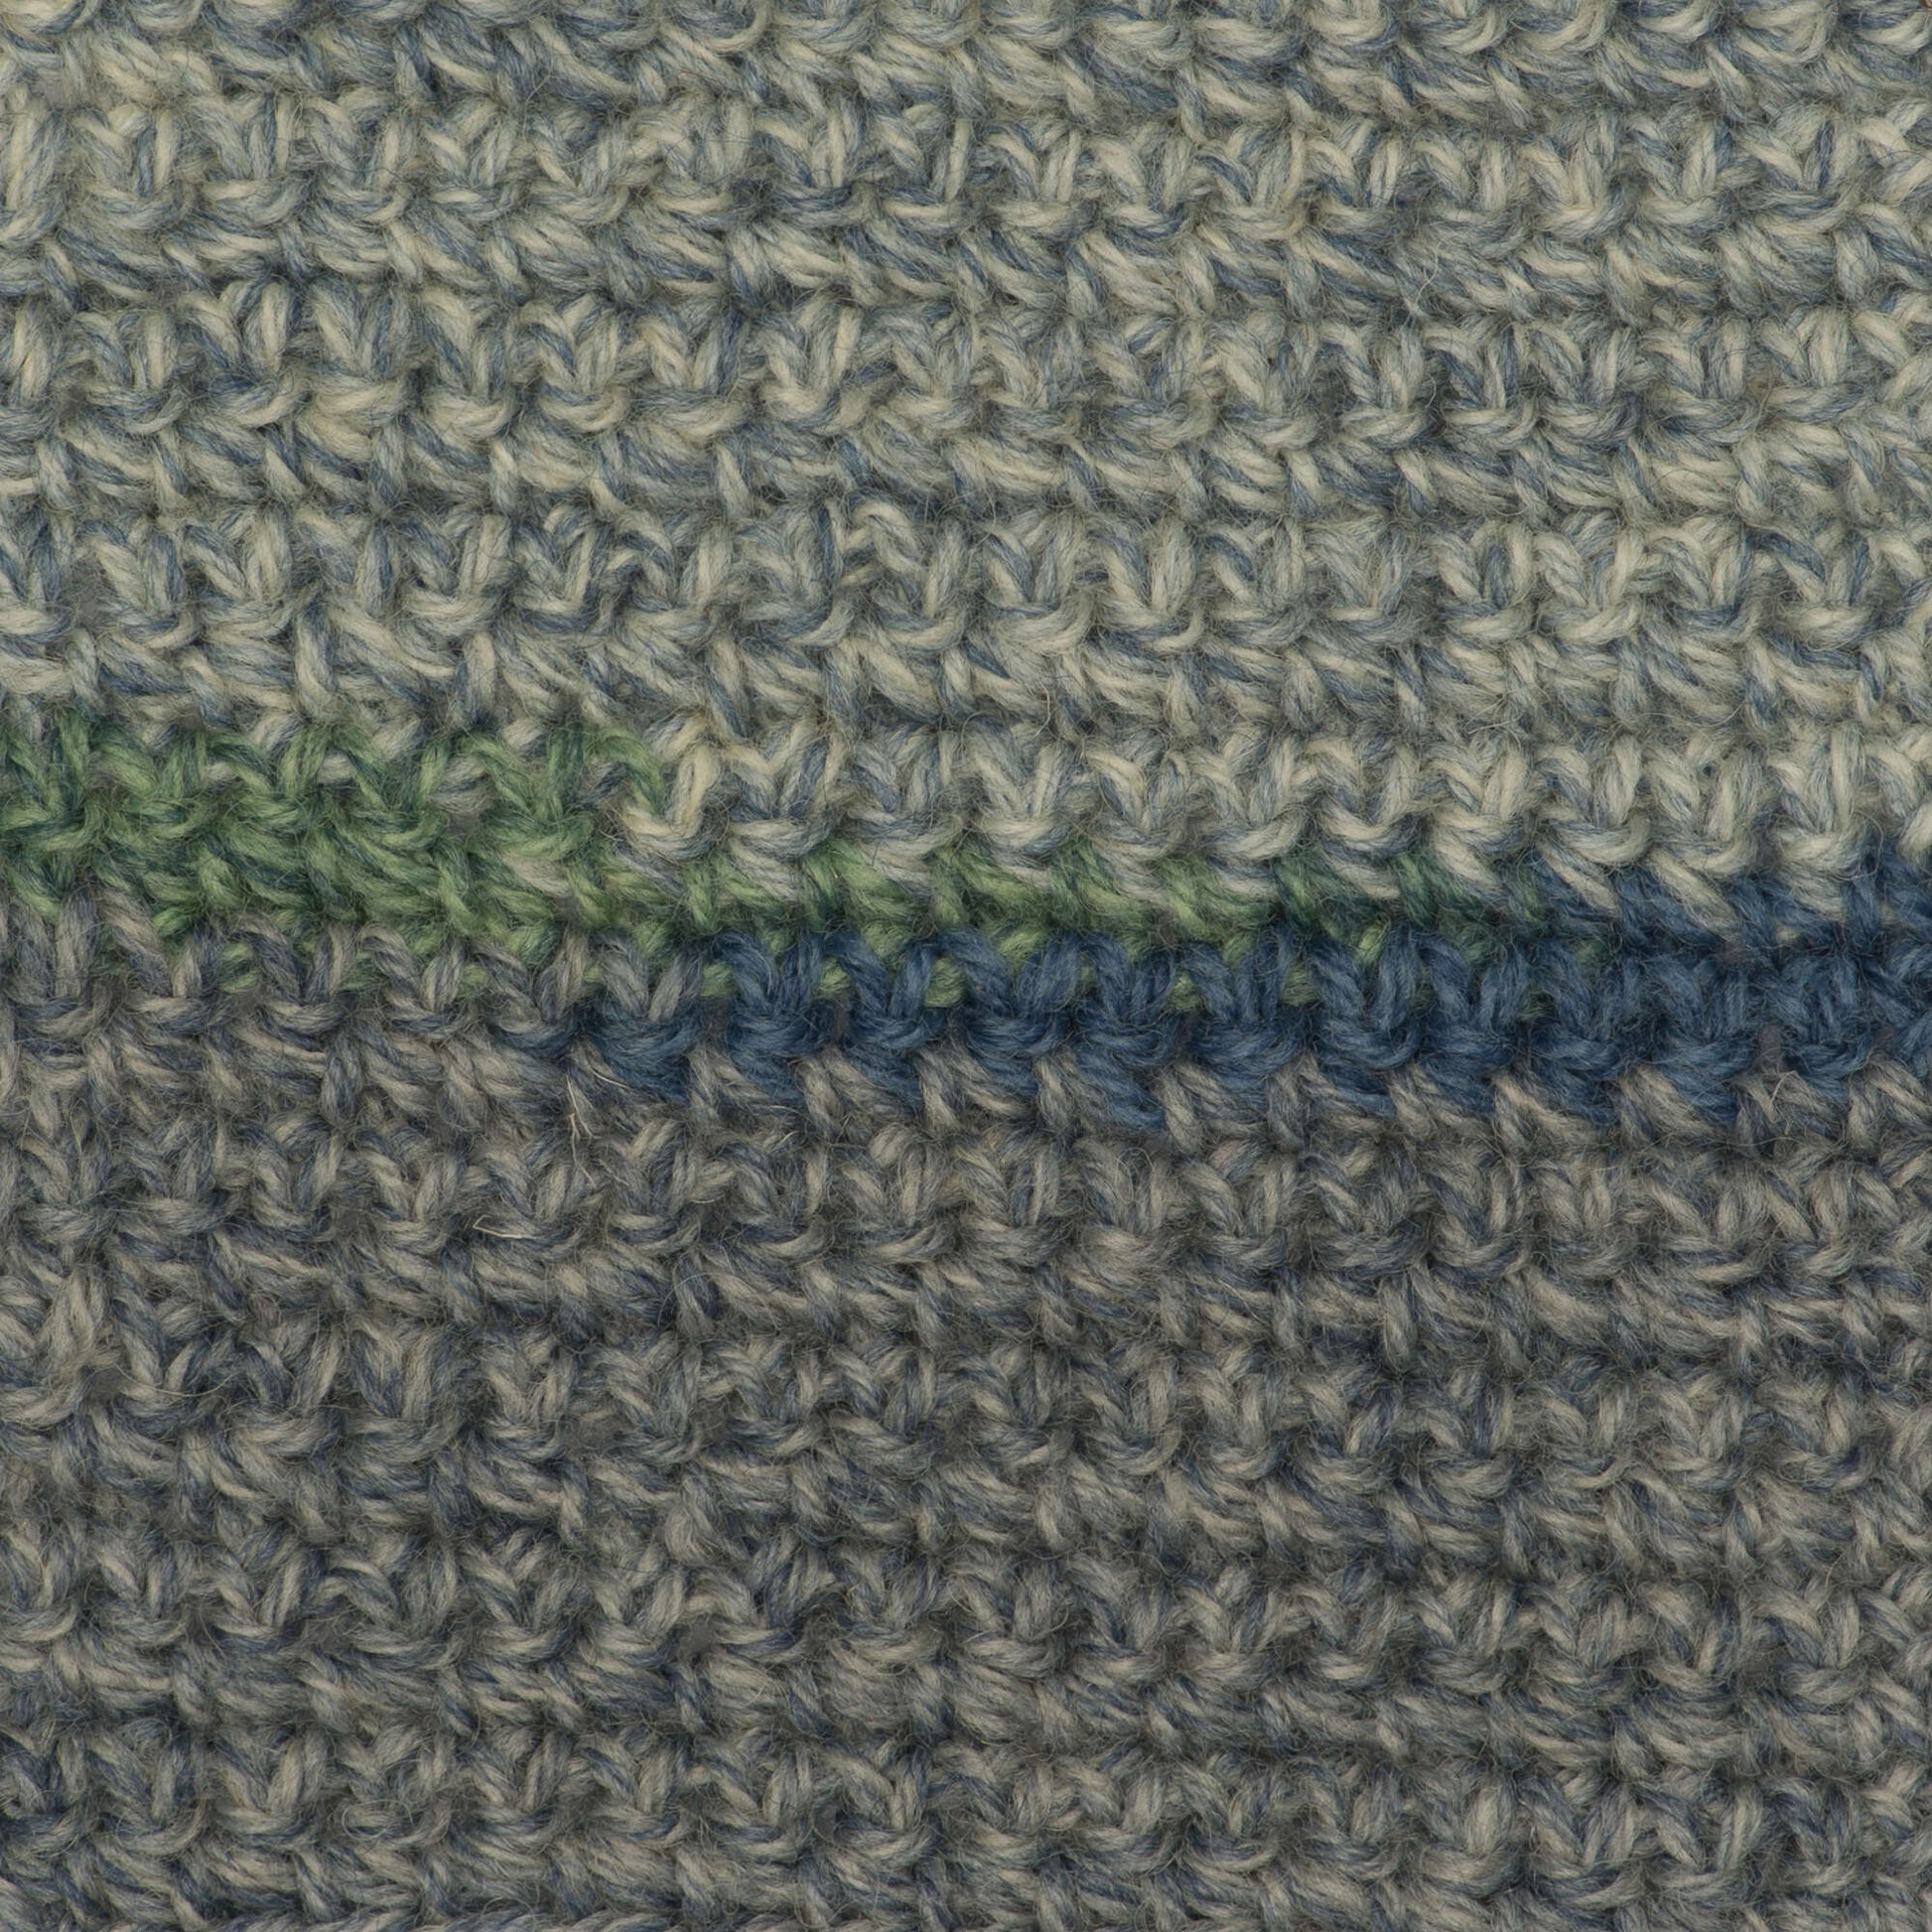 Patons Kroy Socks Yarn - Discontinued Shades Green Striped Ragg